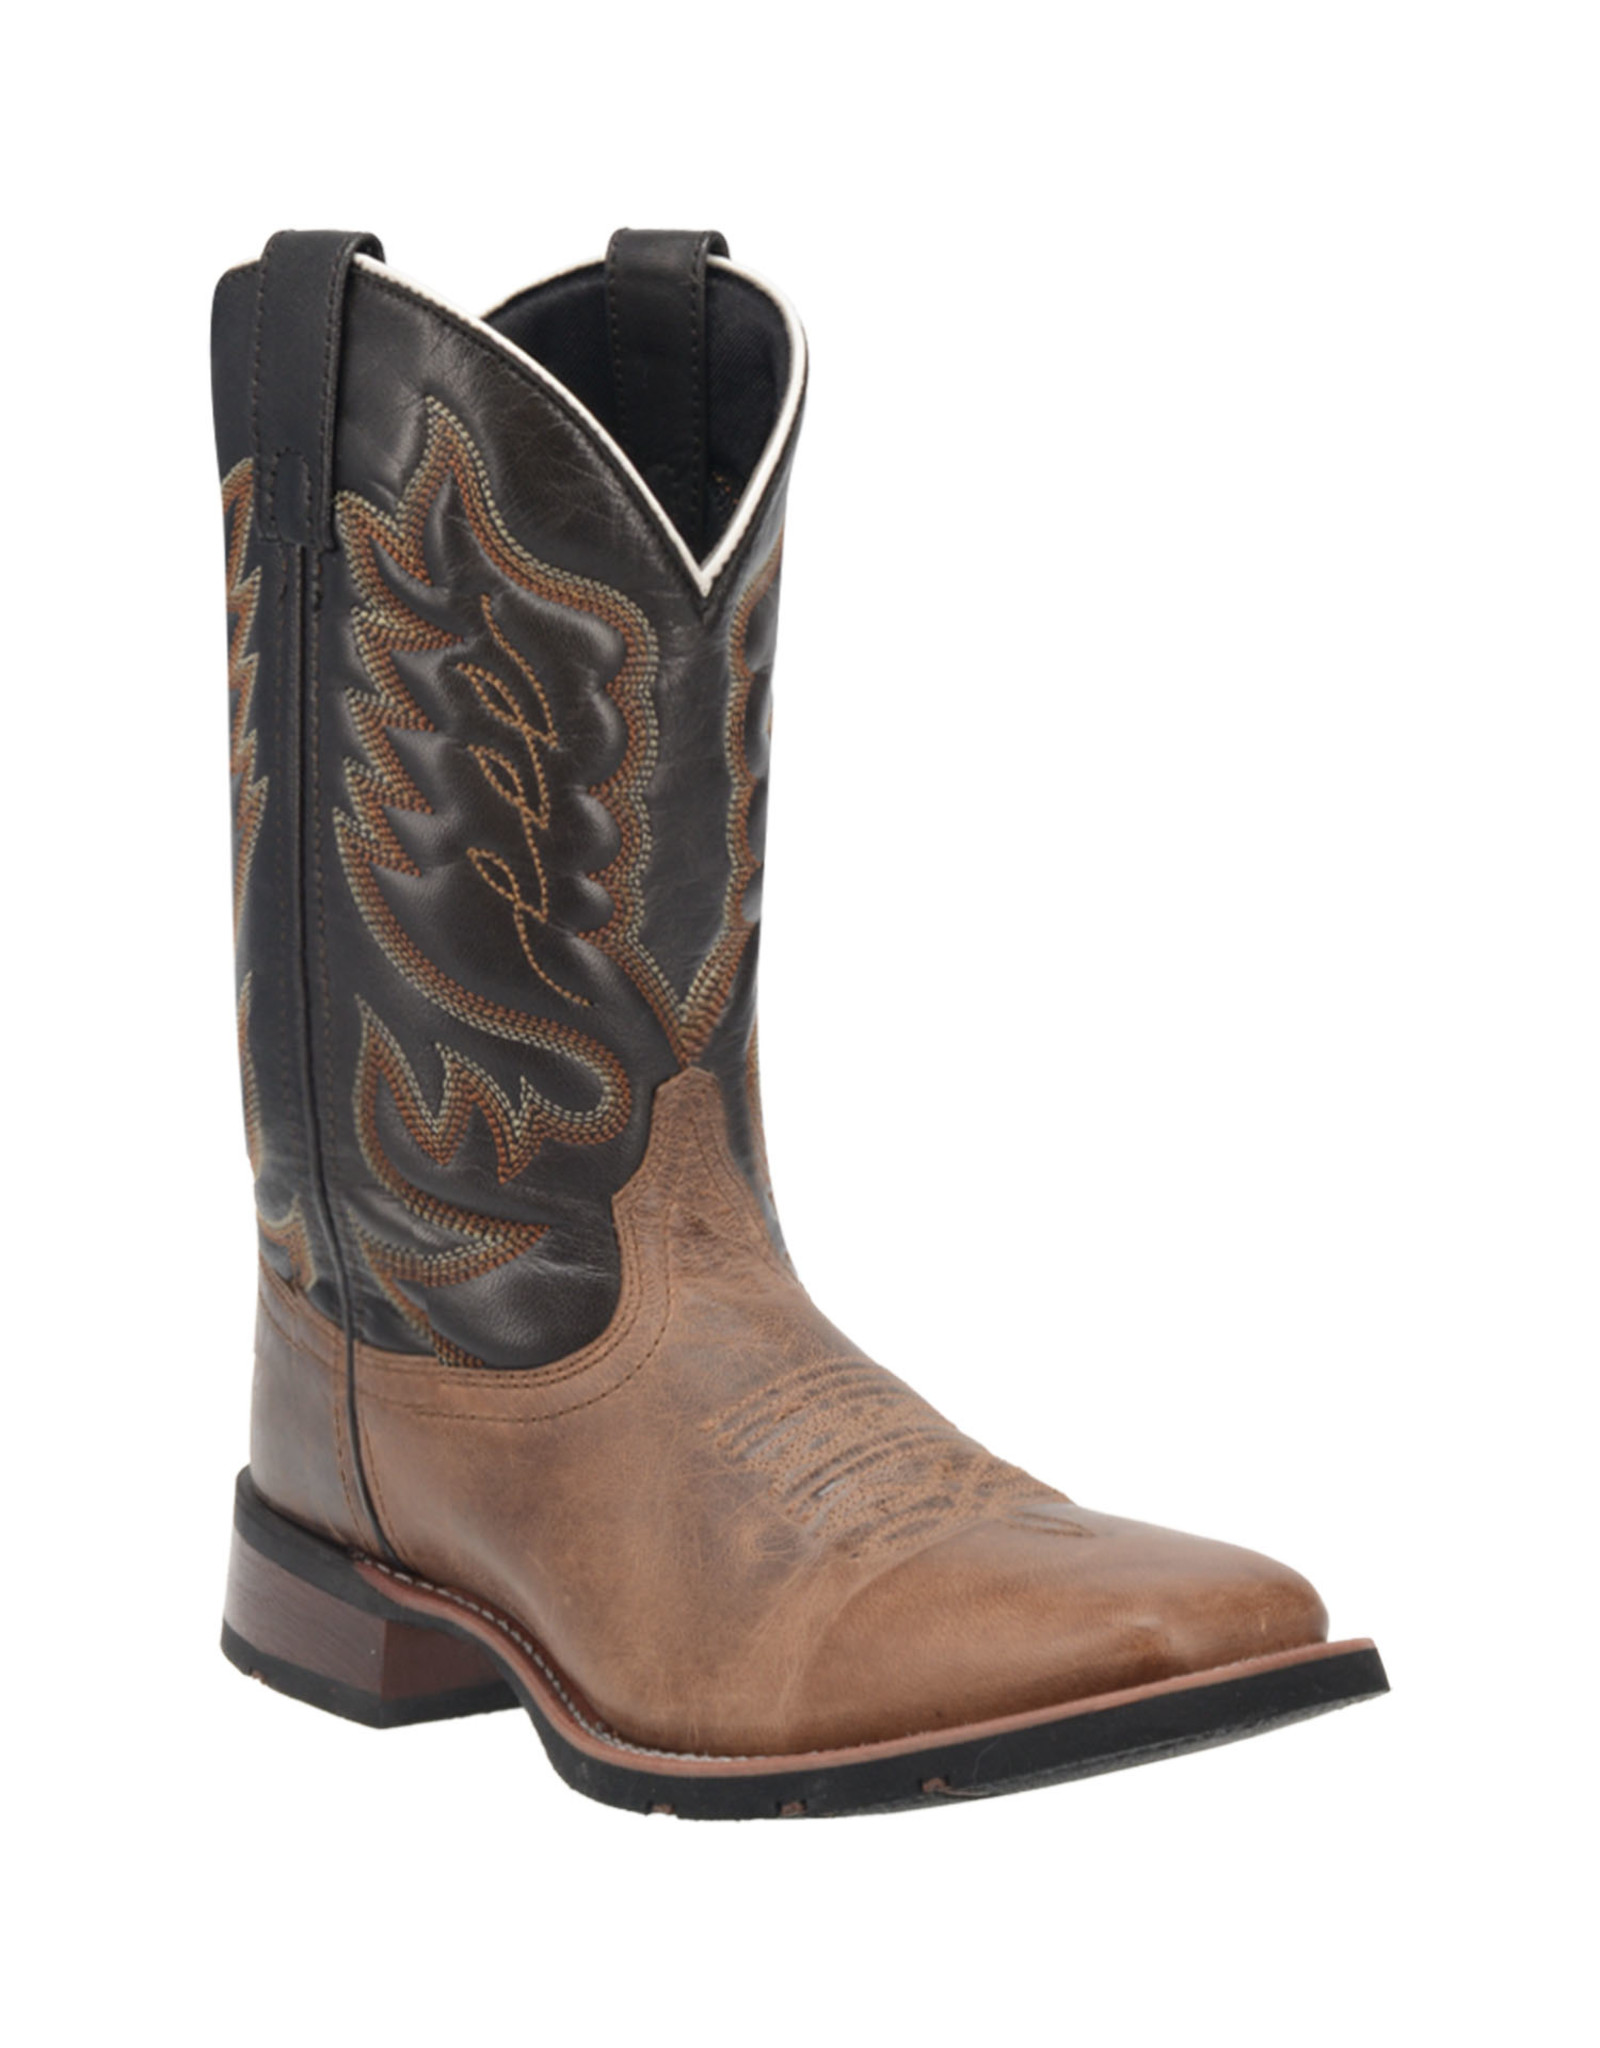 Laredo Men's Montana Sand/Chocolate 7800 Western Boots